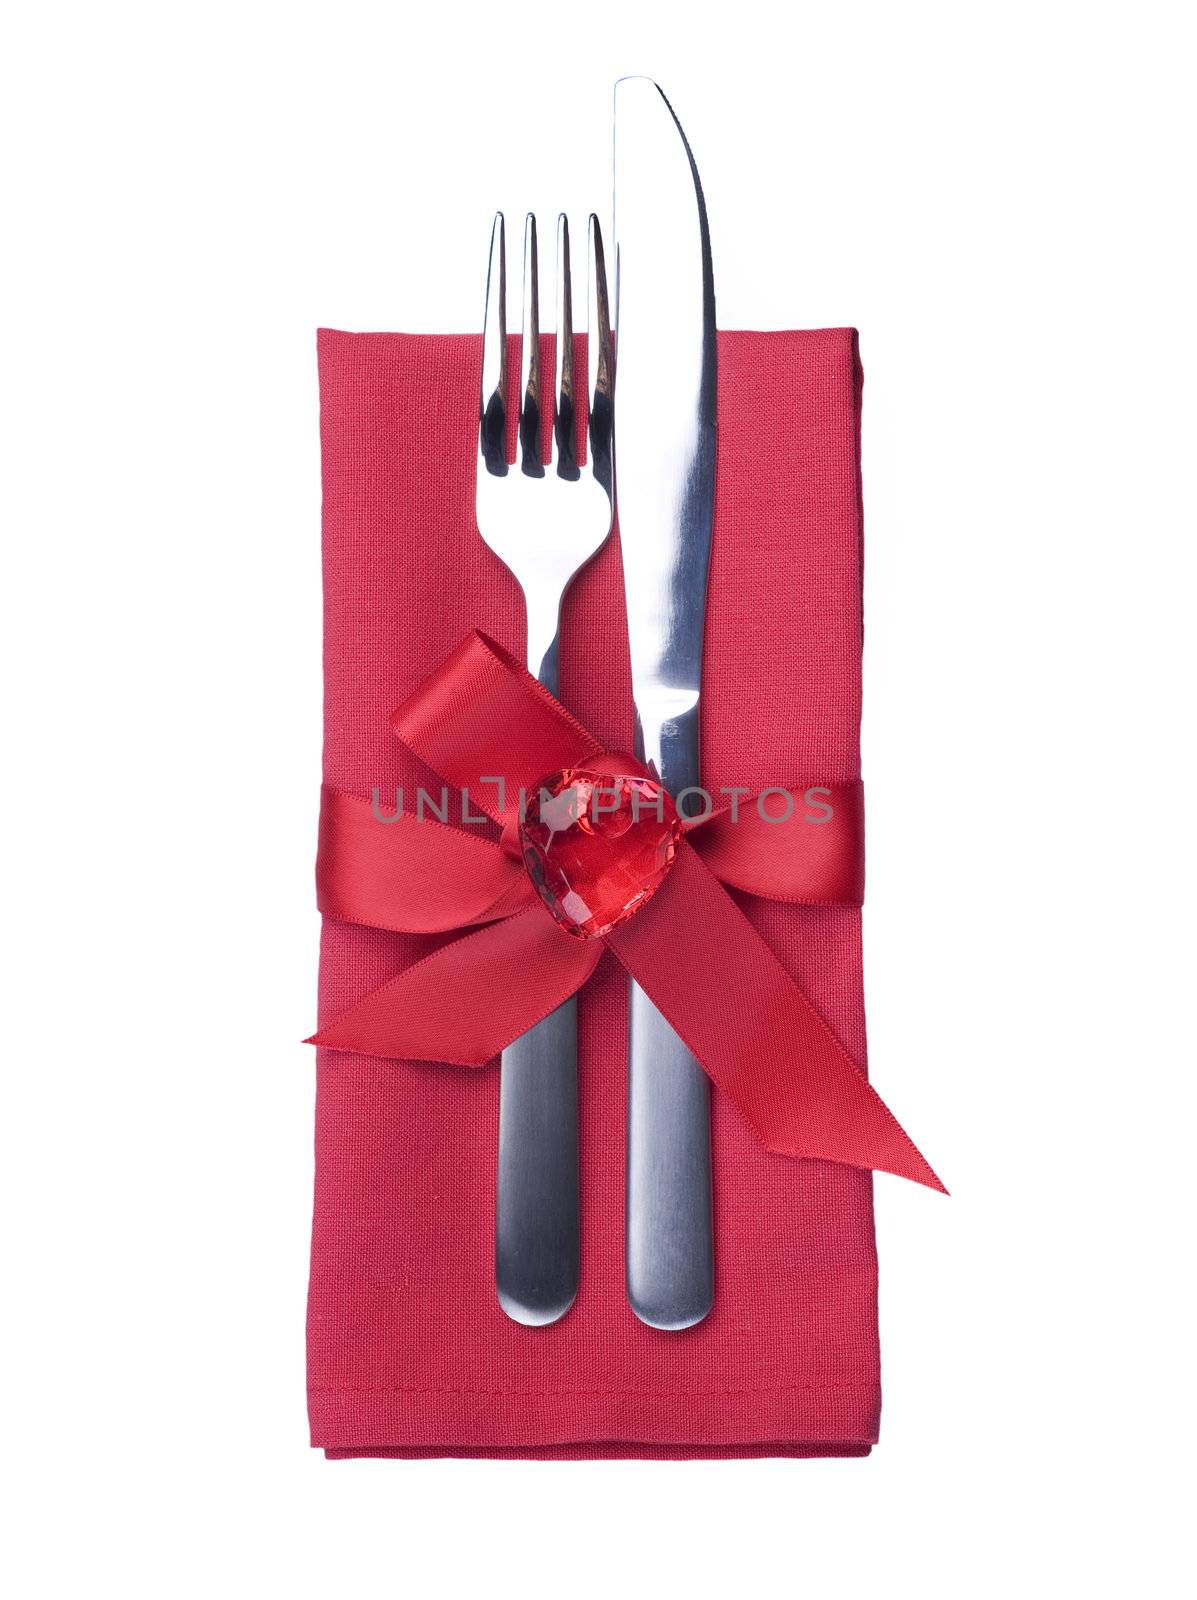 Valentine's Romantic Dinner concept. Cutlery by SubbotinaA